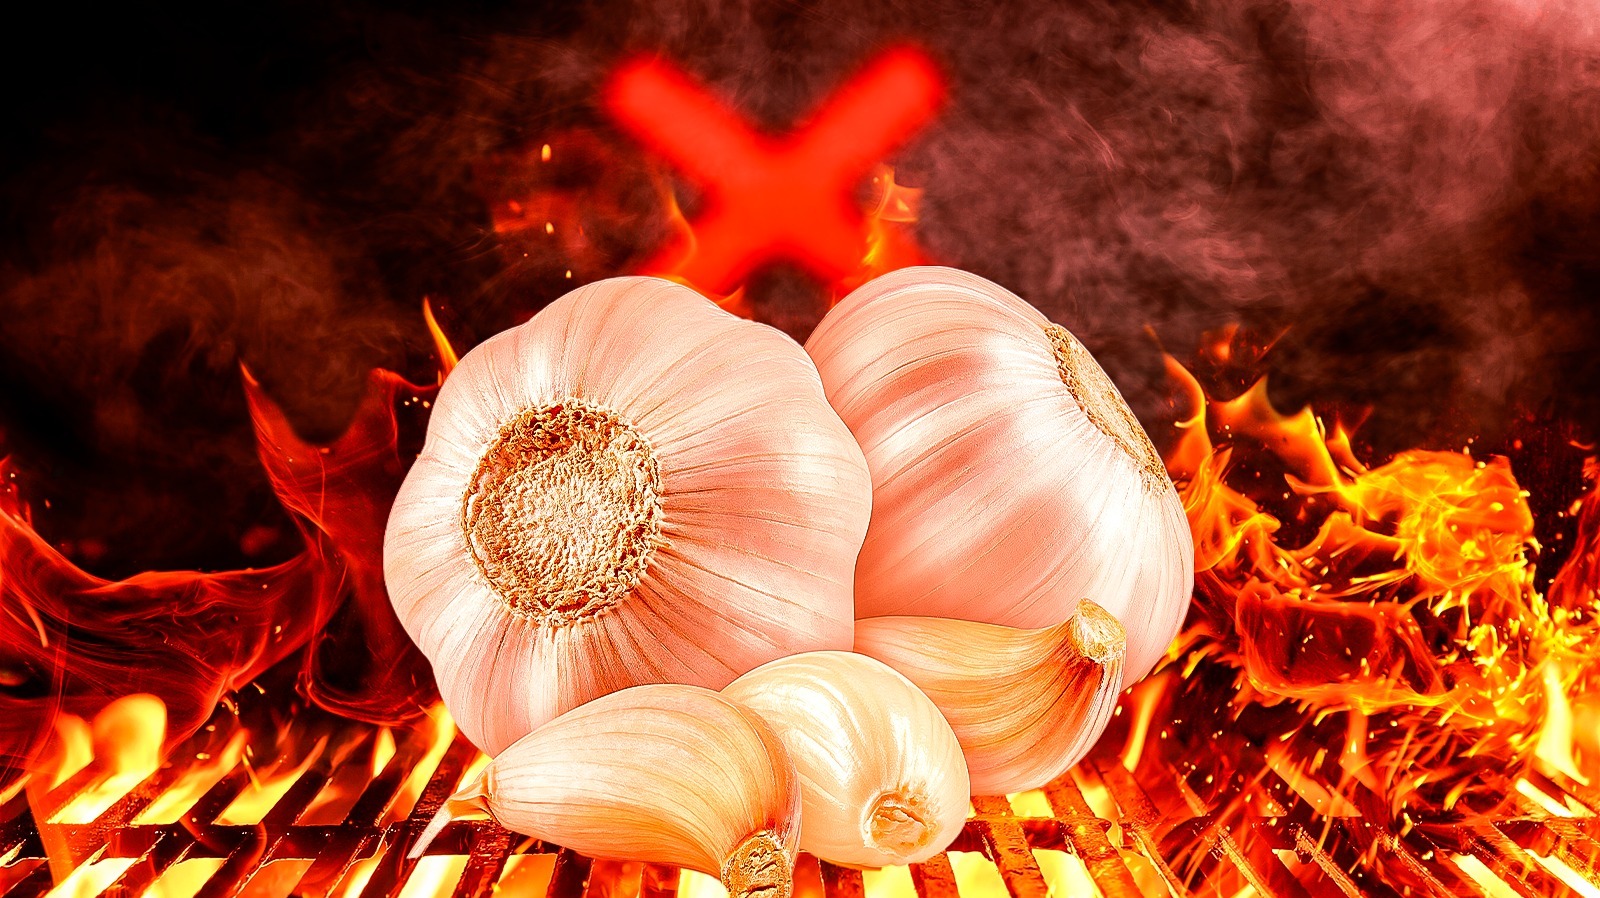 https://www.tastingtable.com/img/gallery/10-mistakes-youre-making-when-roasting-garlic/l-intro-1701365677.jpg